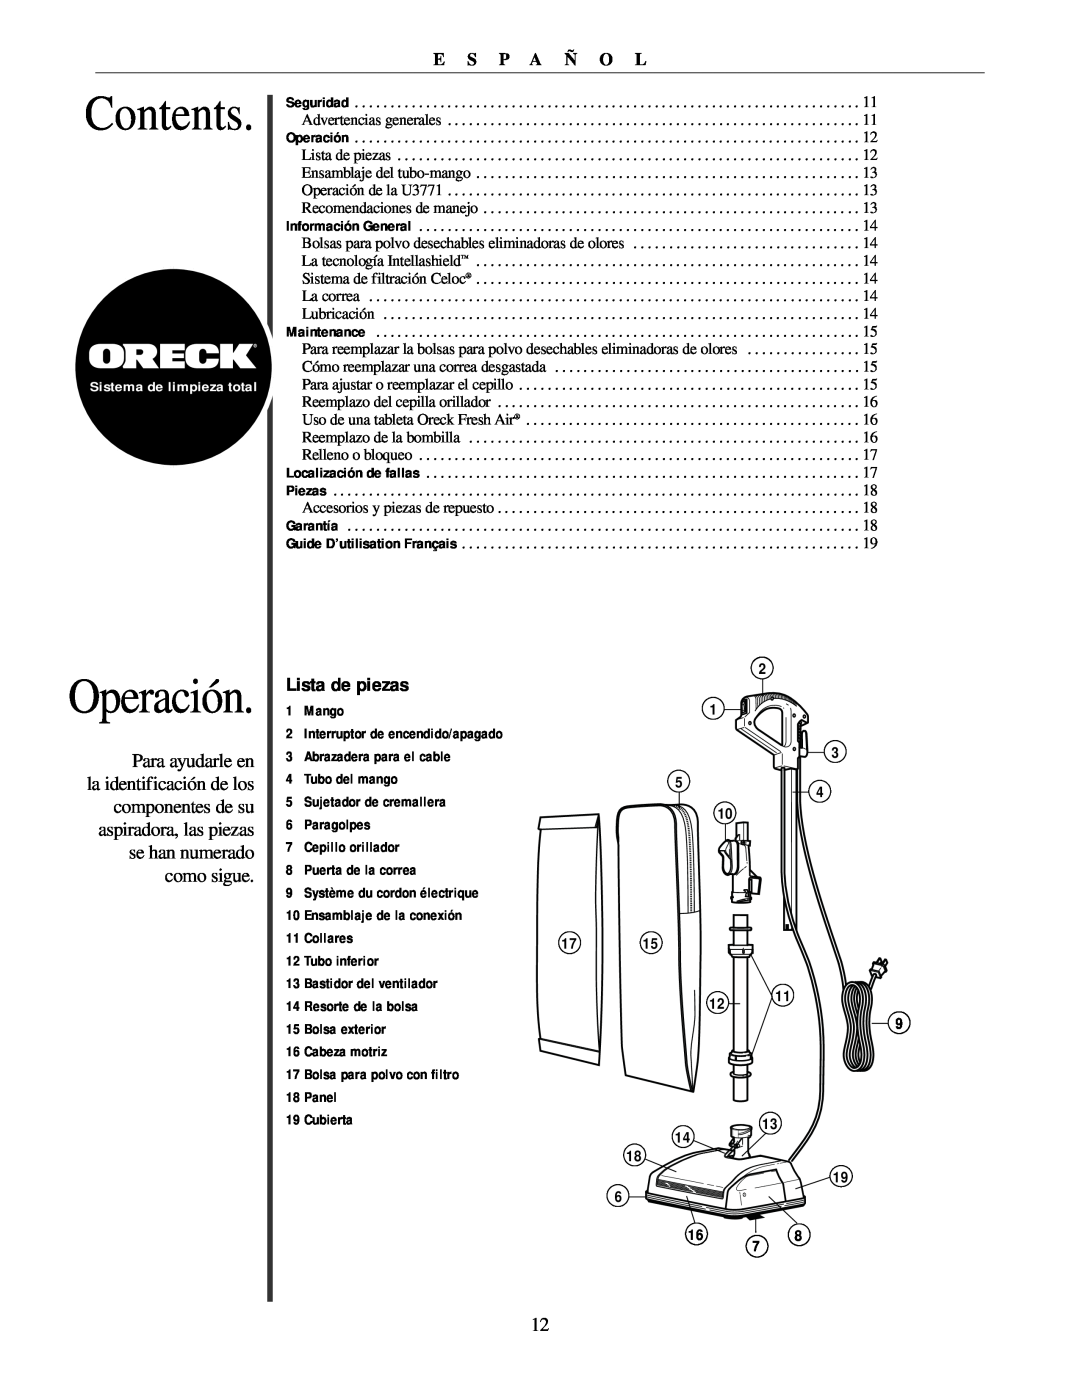 Oreck U3771 manual Operación, Lista de piezas, Contents, E S P A Ñ O L 